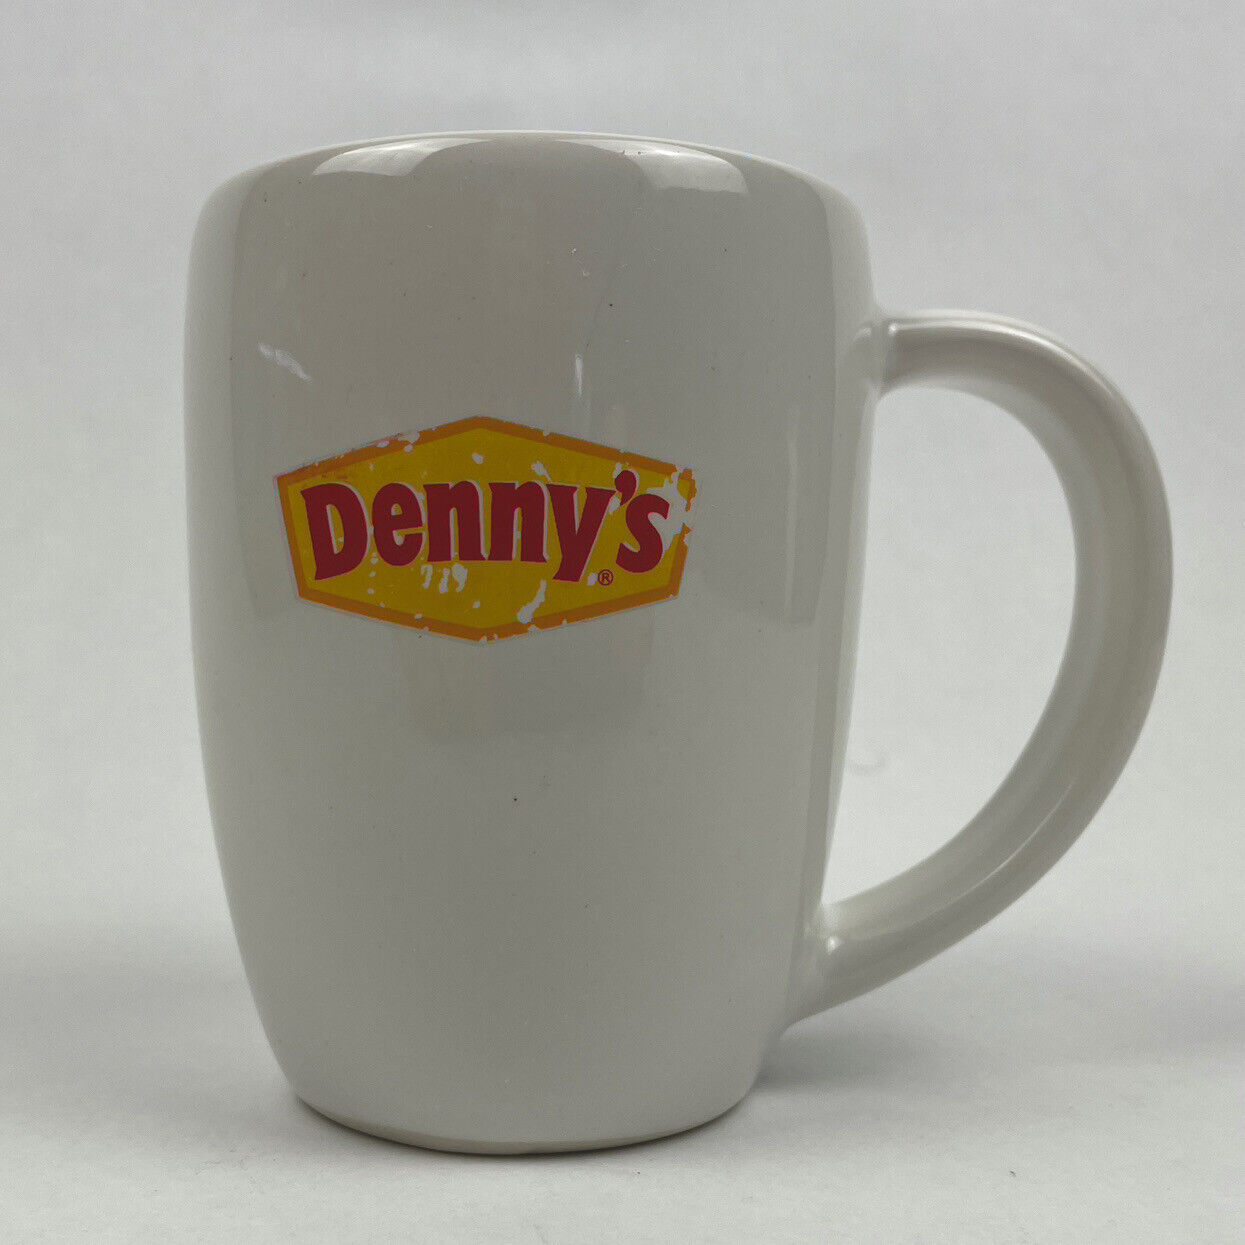 Denny's Coffee Mug - It’s Always Sunny-side Up In a Diner - Oneida